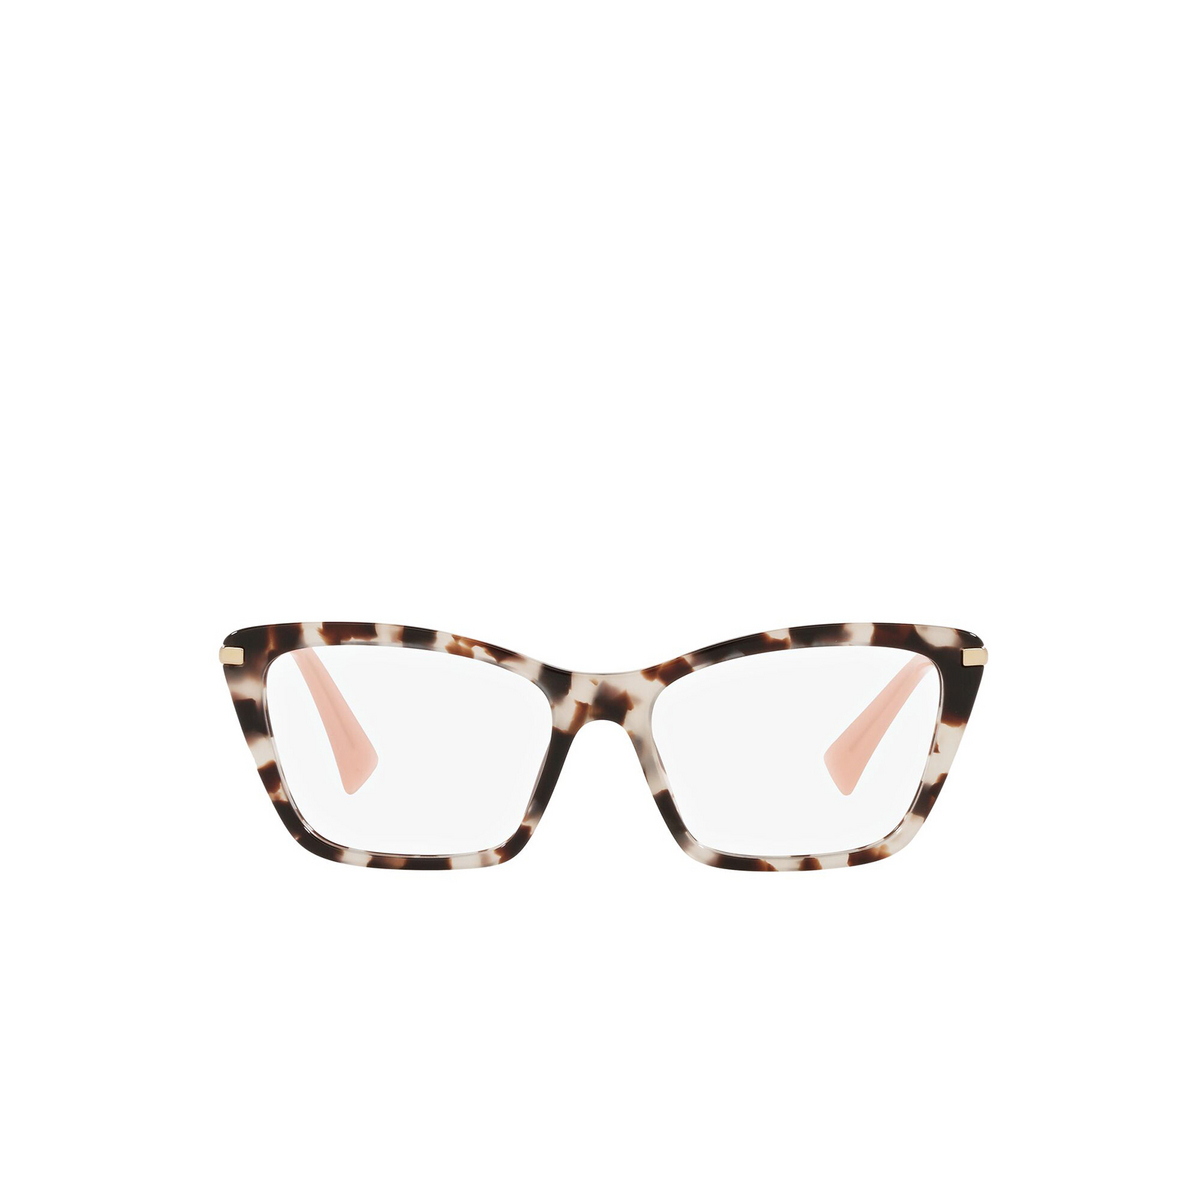 Miu Miu® Cat-eye Eyeglasses: MU 01UV color Talc Havana UAO1O1 - front view.